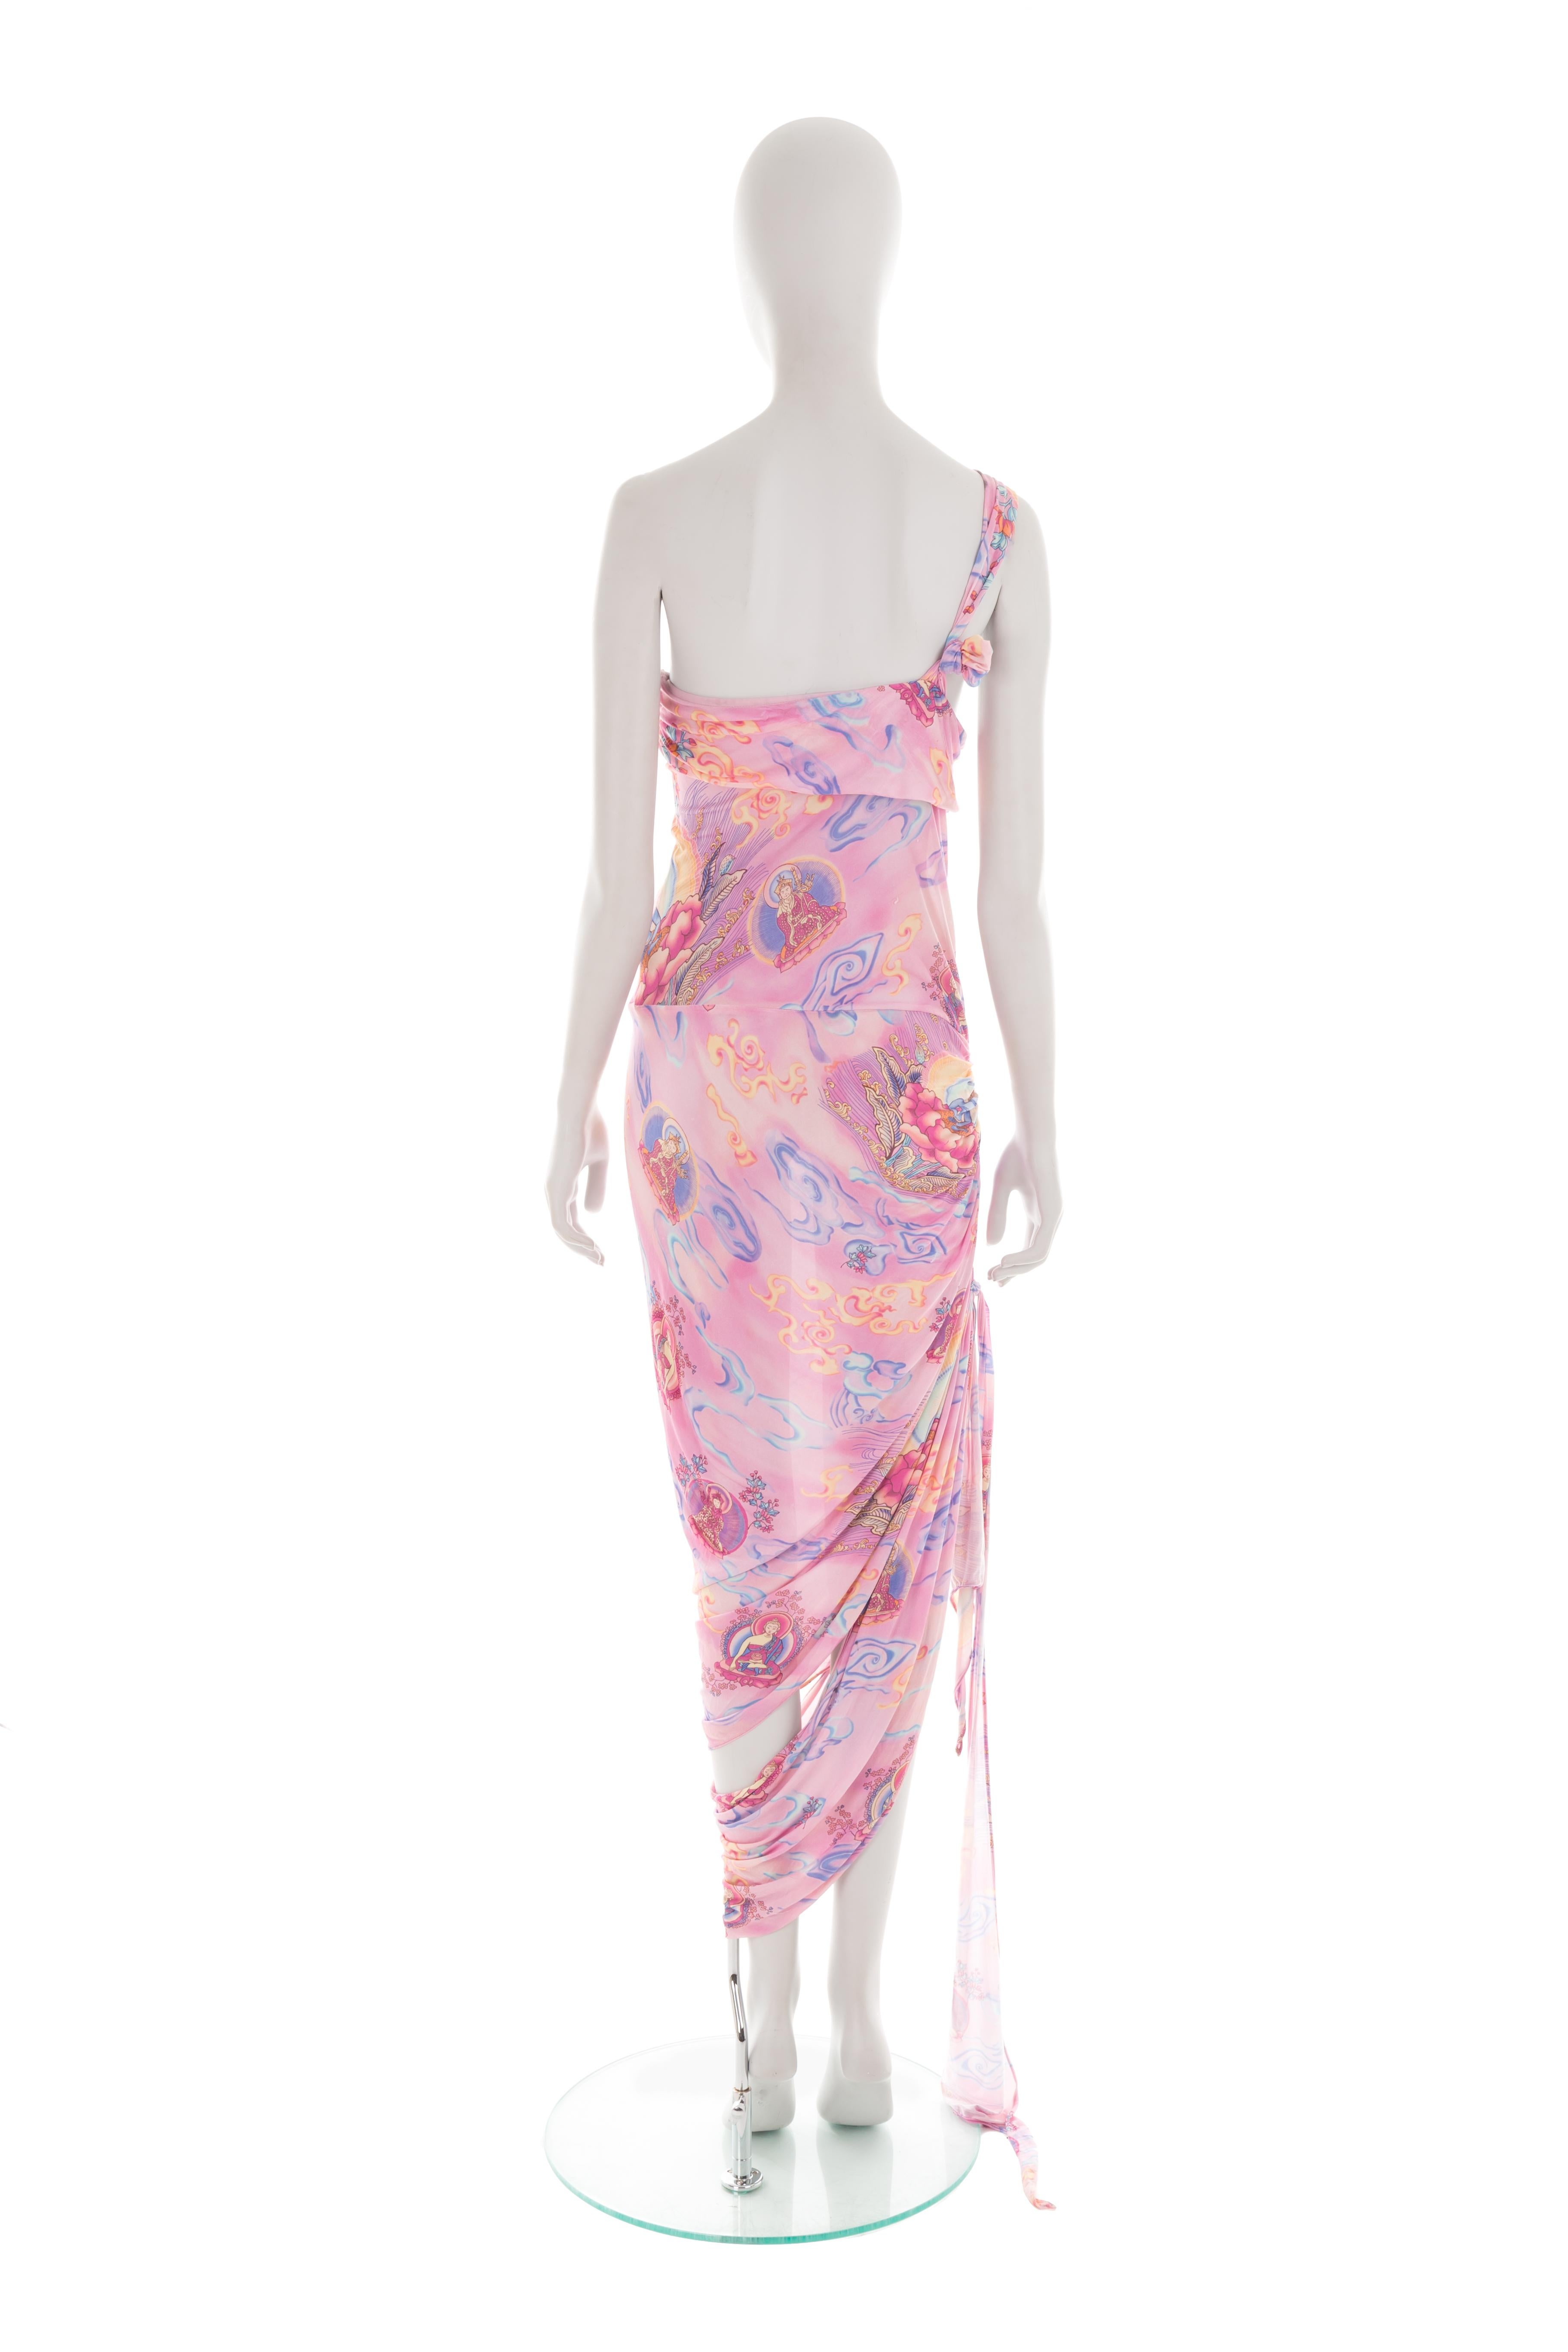 Emanuel Ungaro S/S 2004 pink “Shiva” print draped cut-out dress For Sale 4